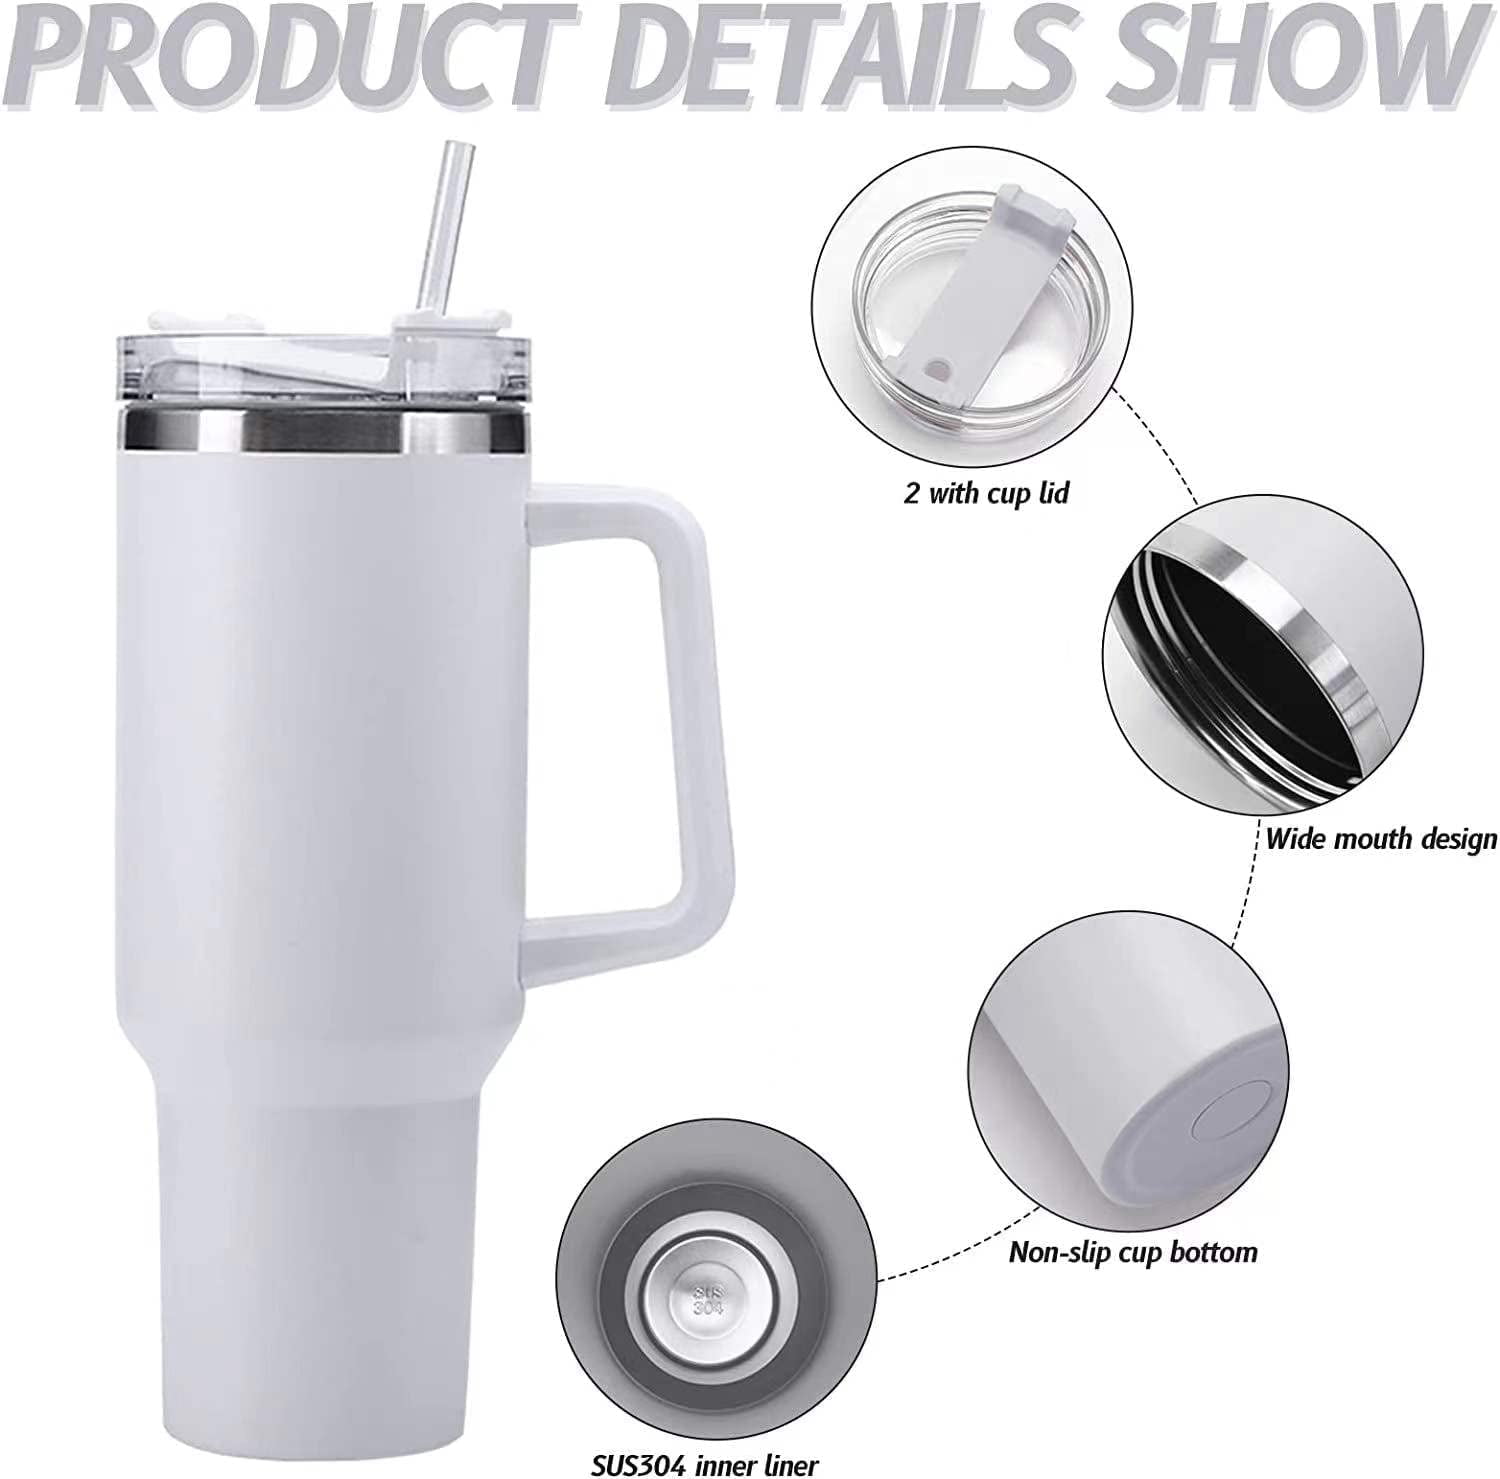 【New Product】Hydroflask Travel Tumbler (32oz & 40oz)